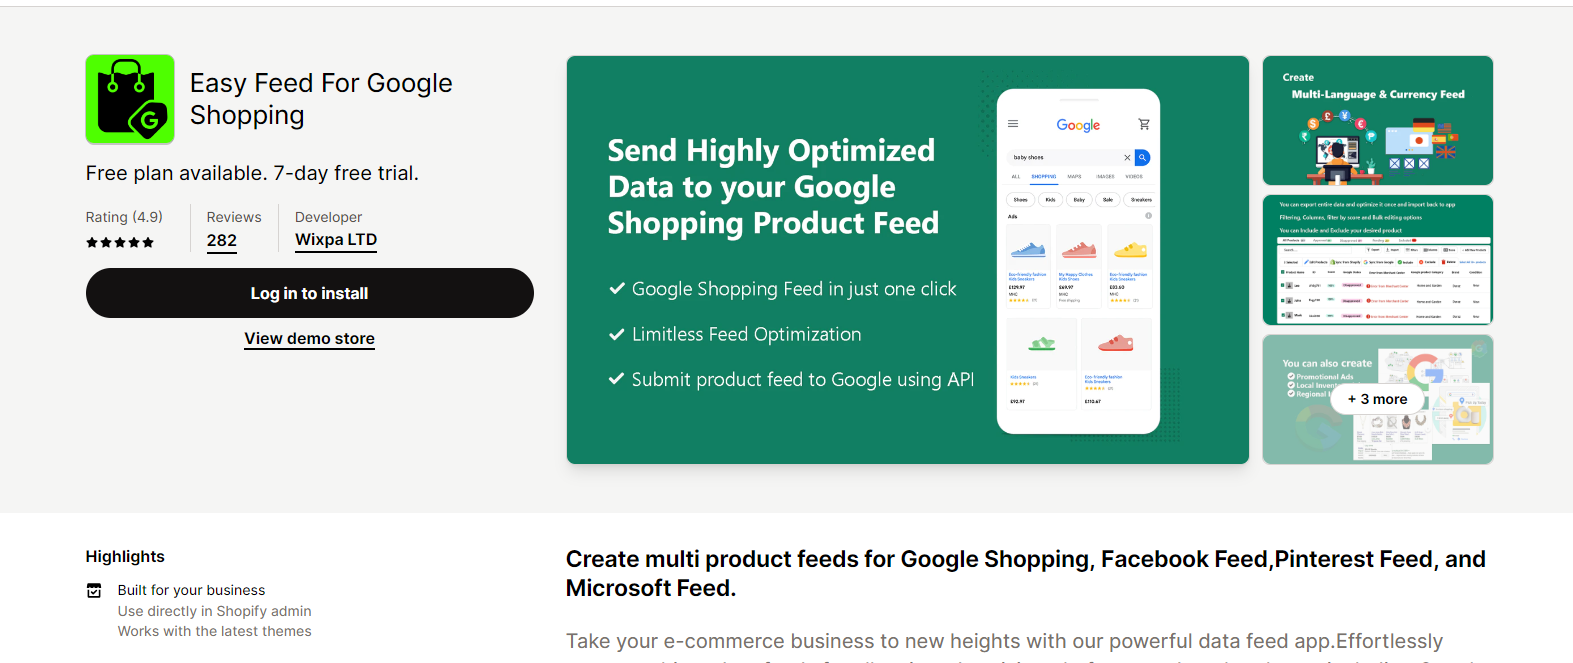 Easy Feed For Google Shopping